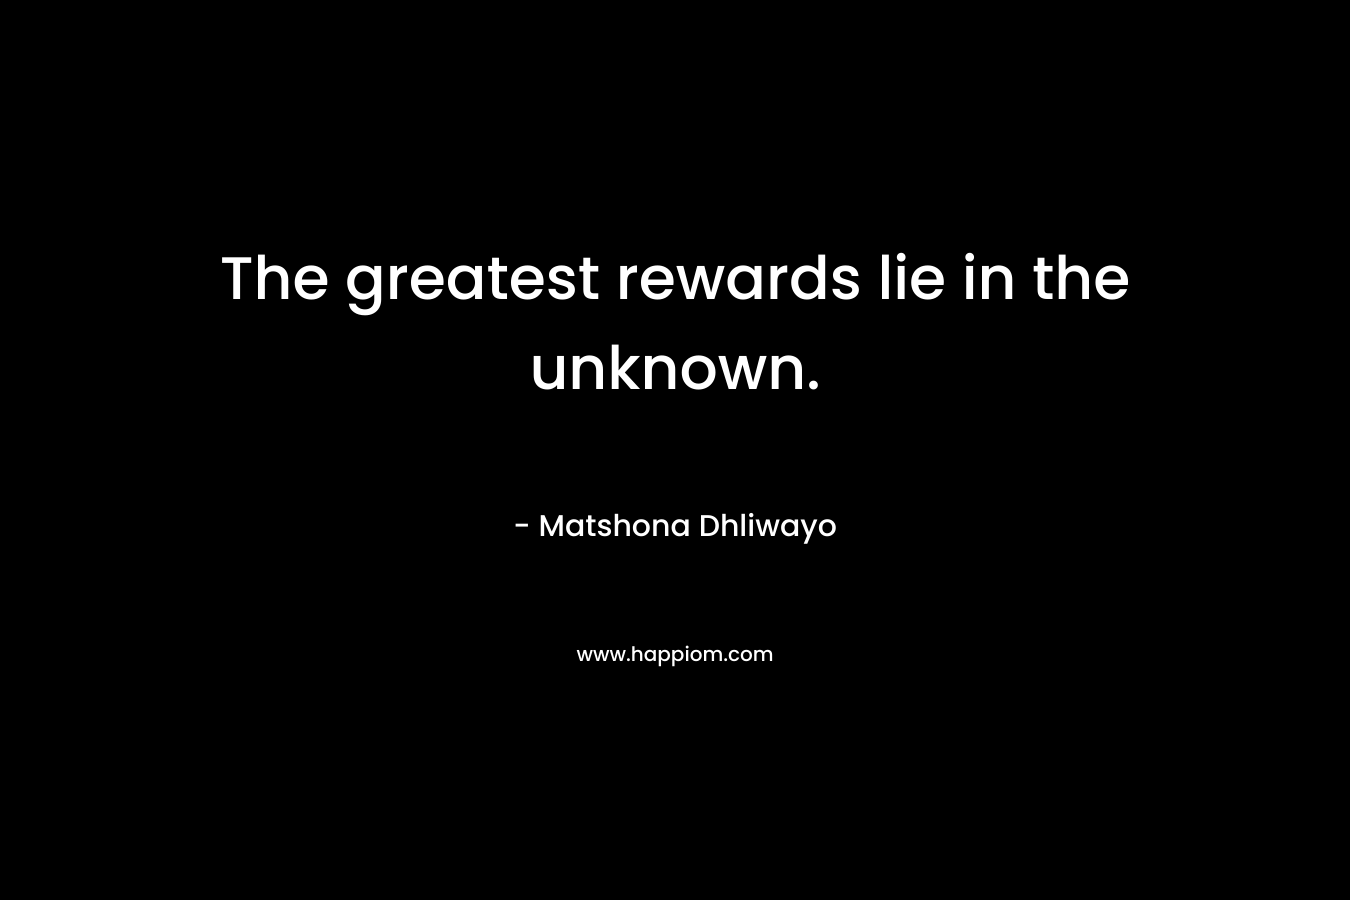 The greatest rewards lie in the unknown.